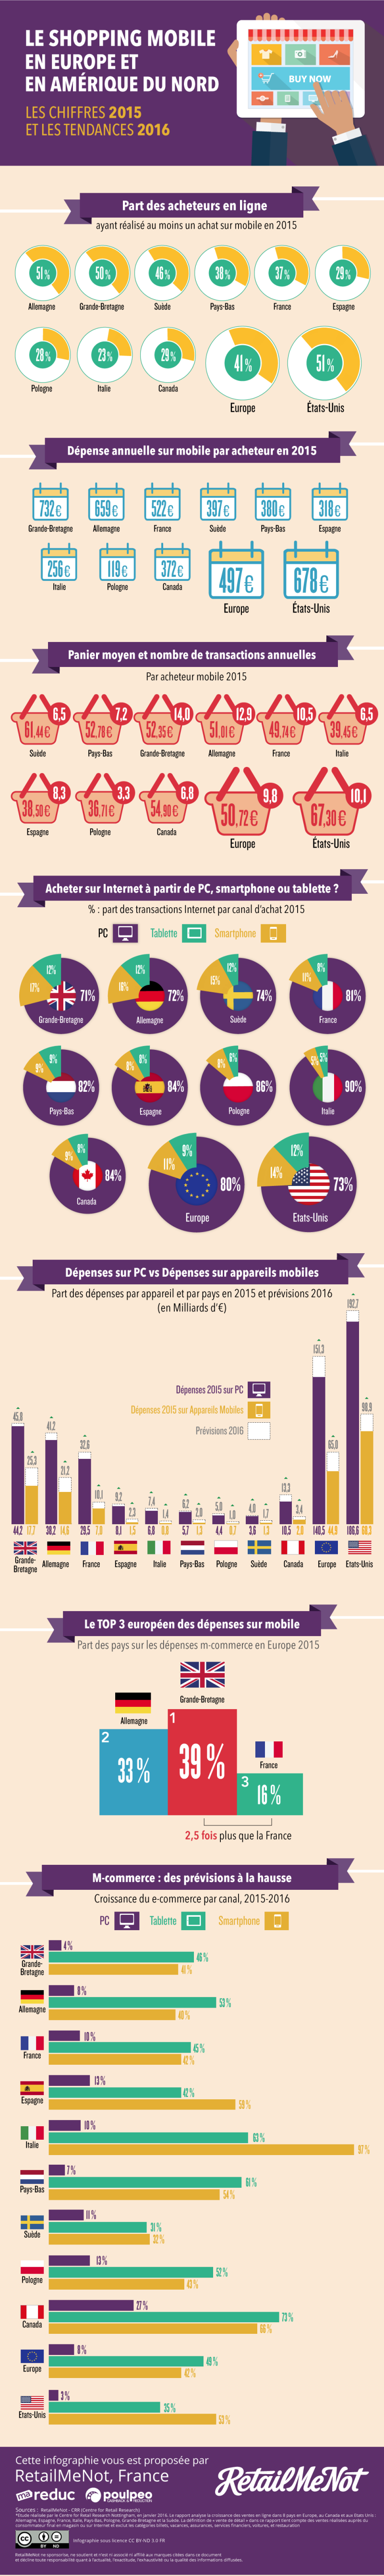 La progression du shopping mobile en europe